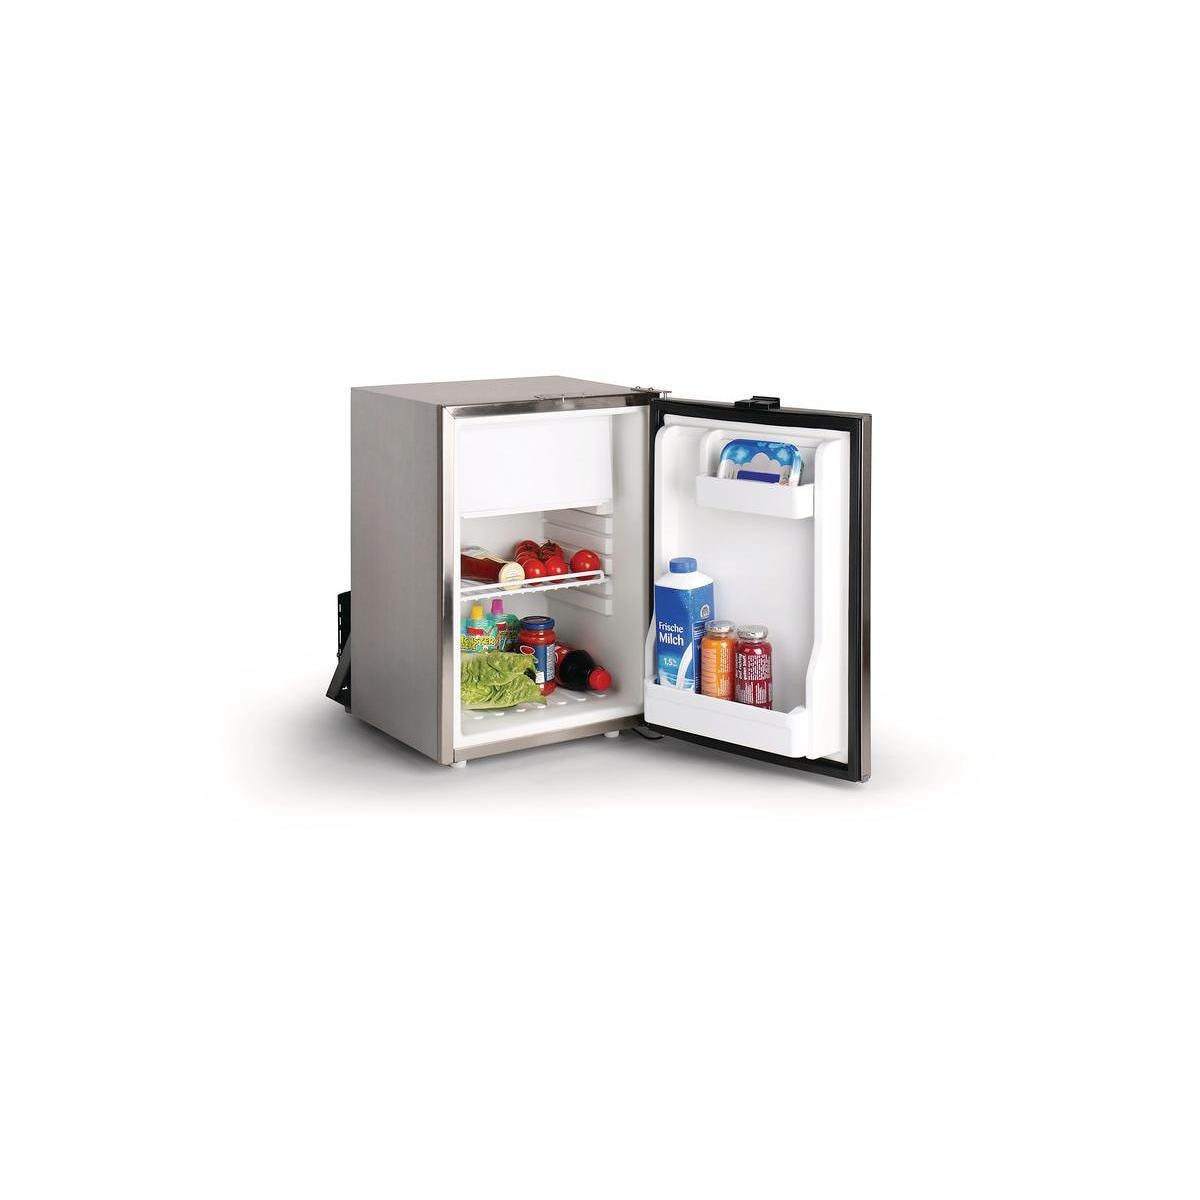 12 V LYN Tragbarer 16-Liter-Kompressor-Kühlschrank mit Gefrierfach Farbe : Blau 220 V 